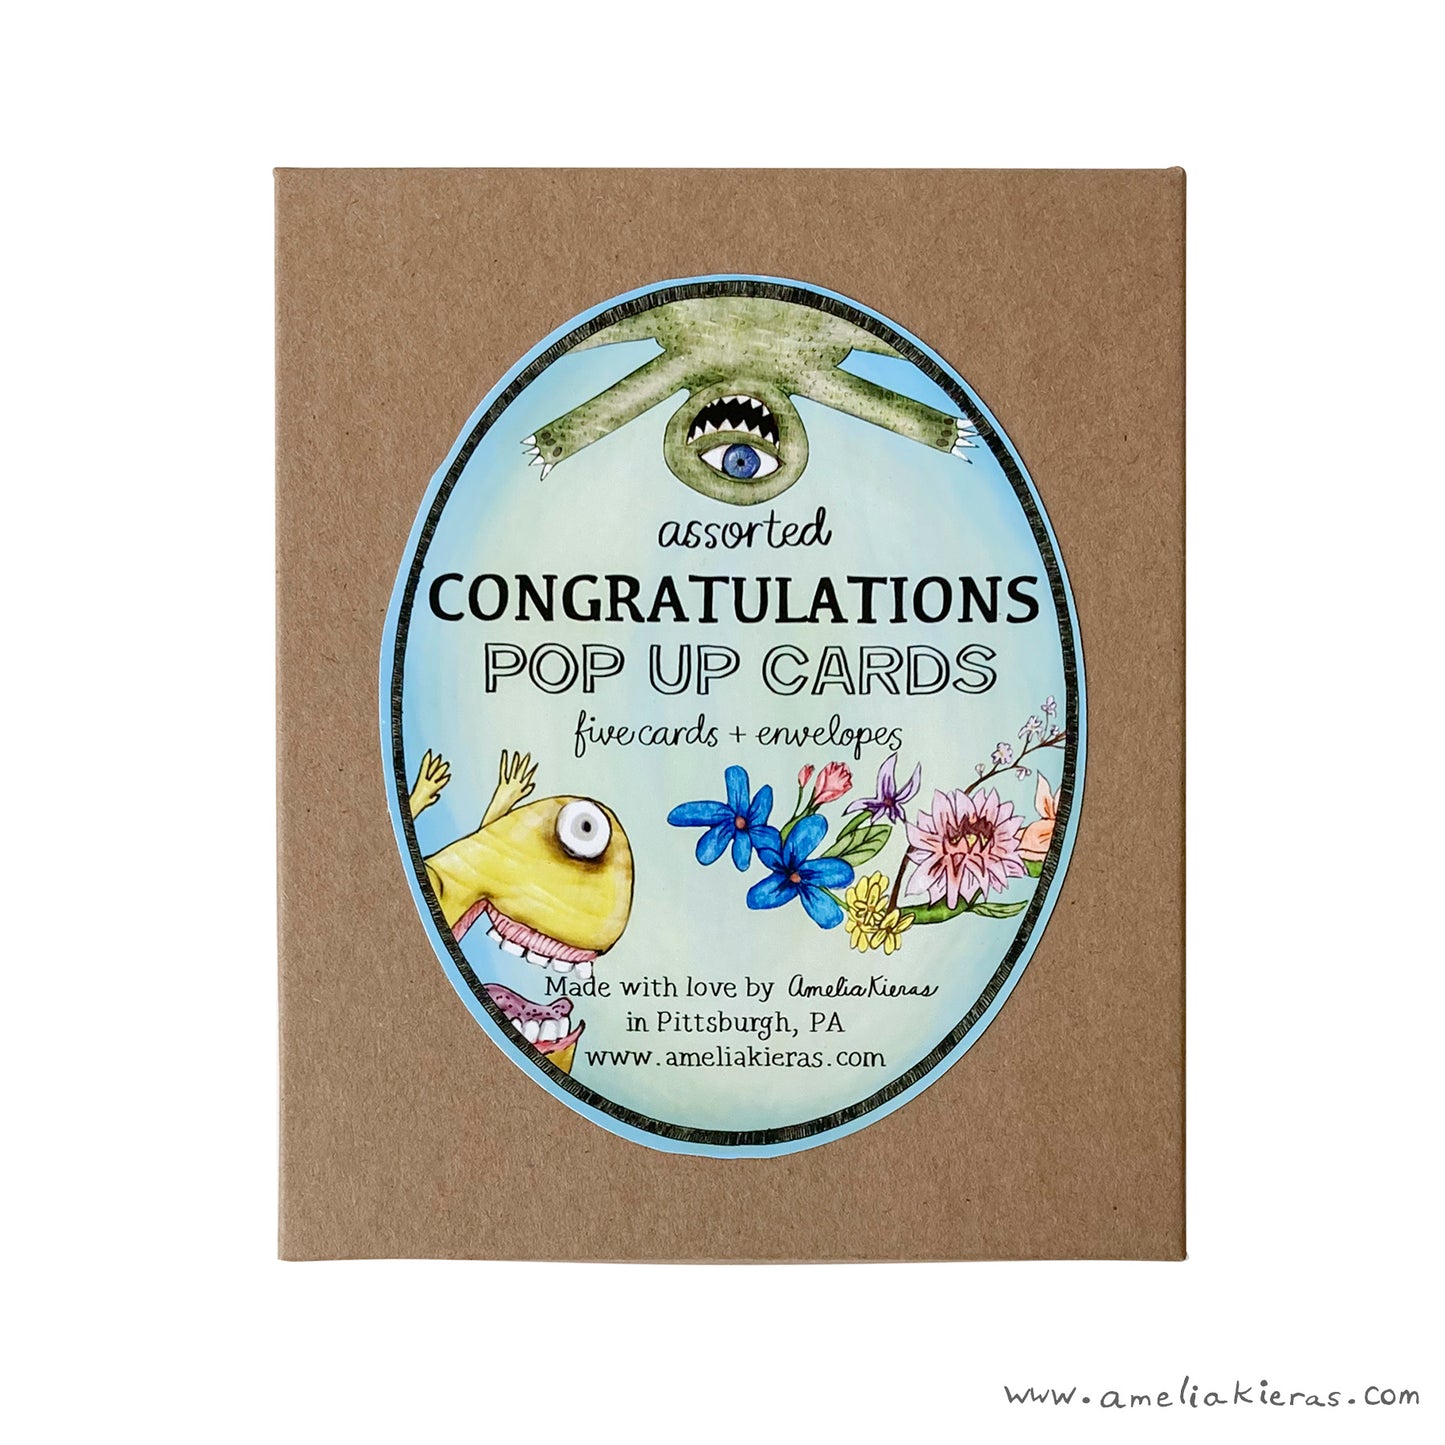 Congratulations Pop Up Card Box Set - Set of Five Assorted Pop Up Cards